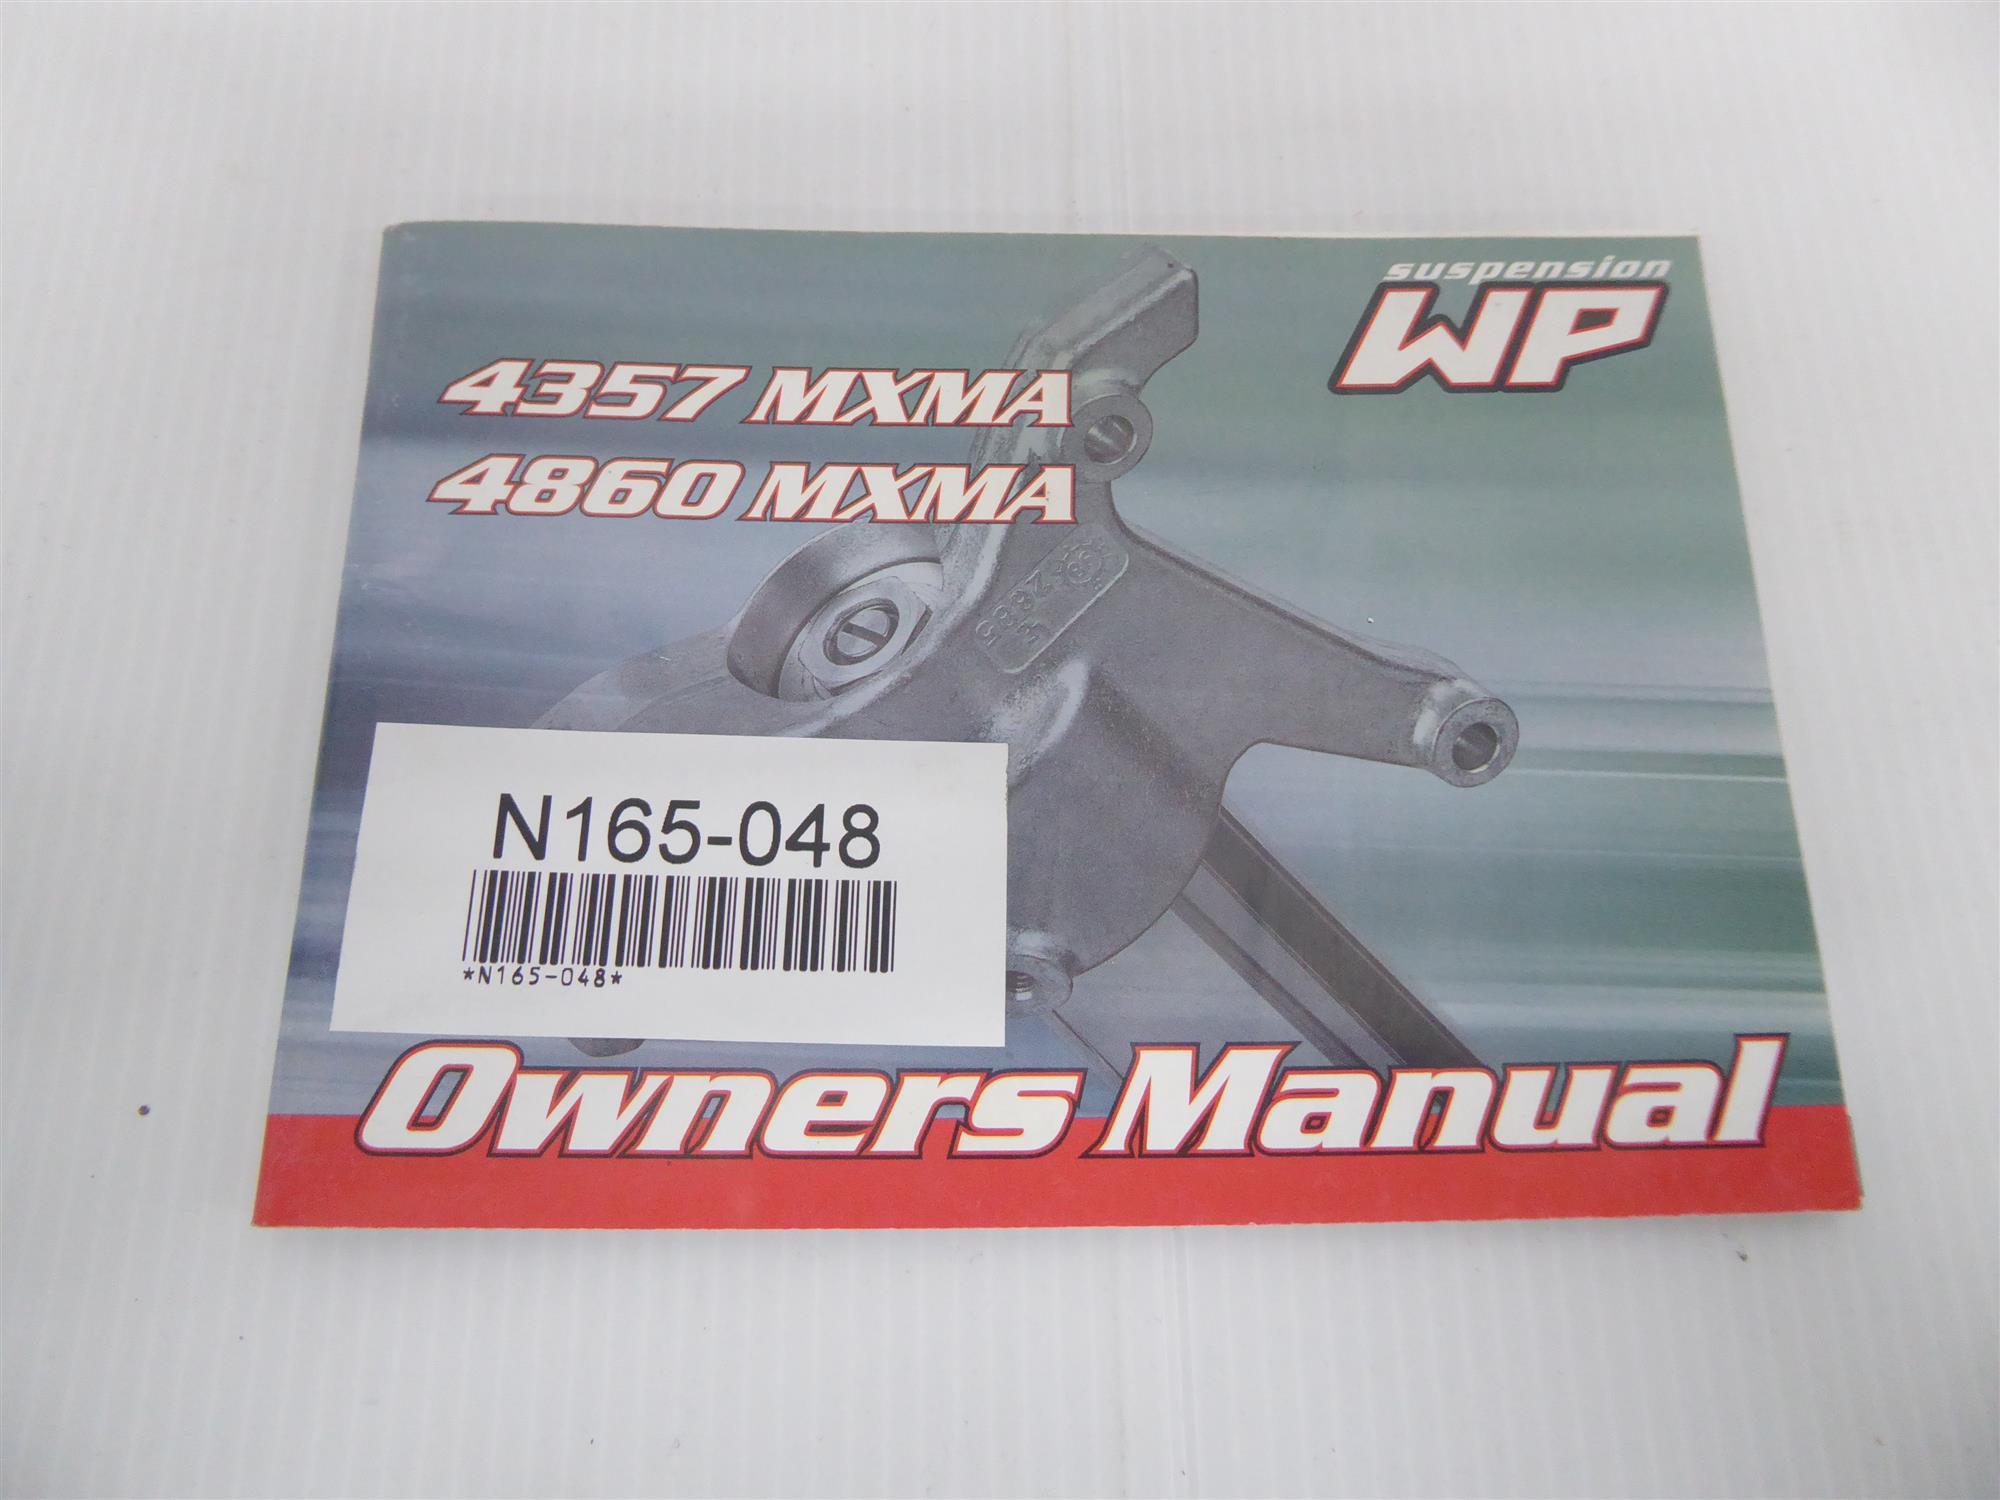 WP 4357 4860 MXMA Owners Manual 53000053